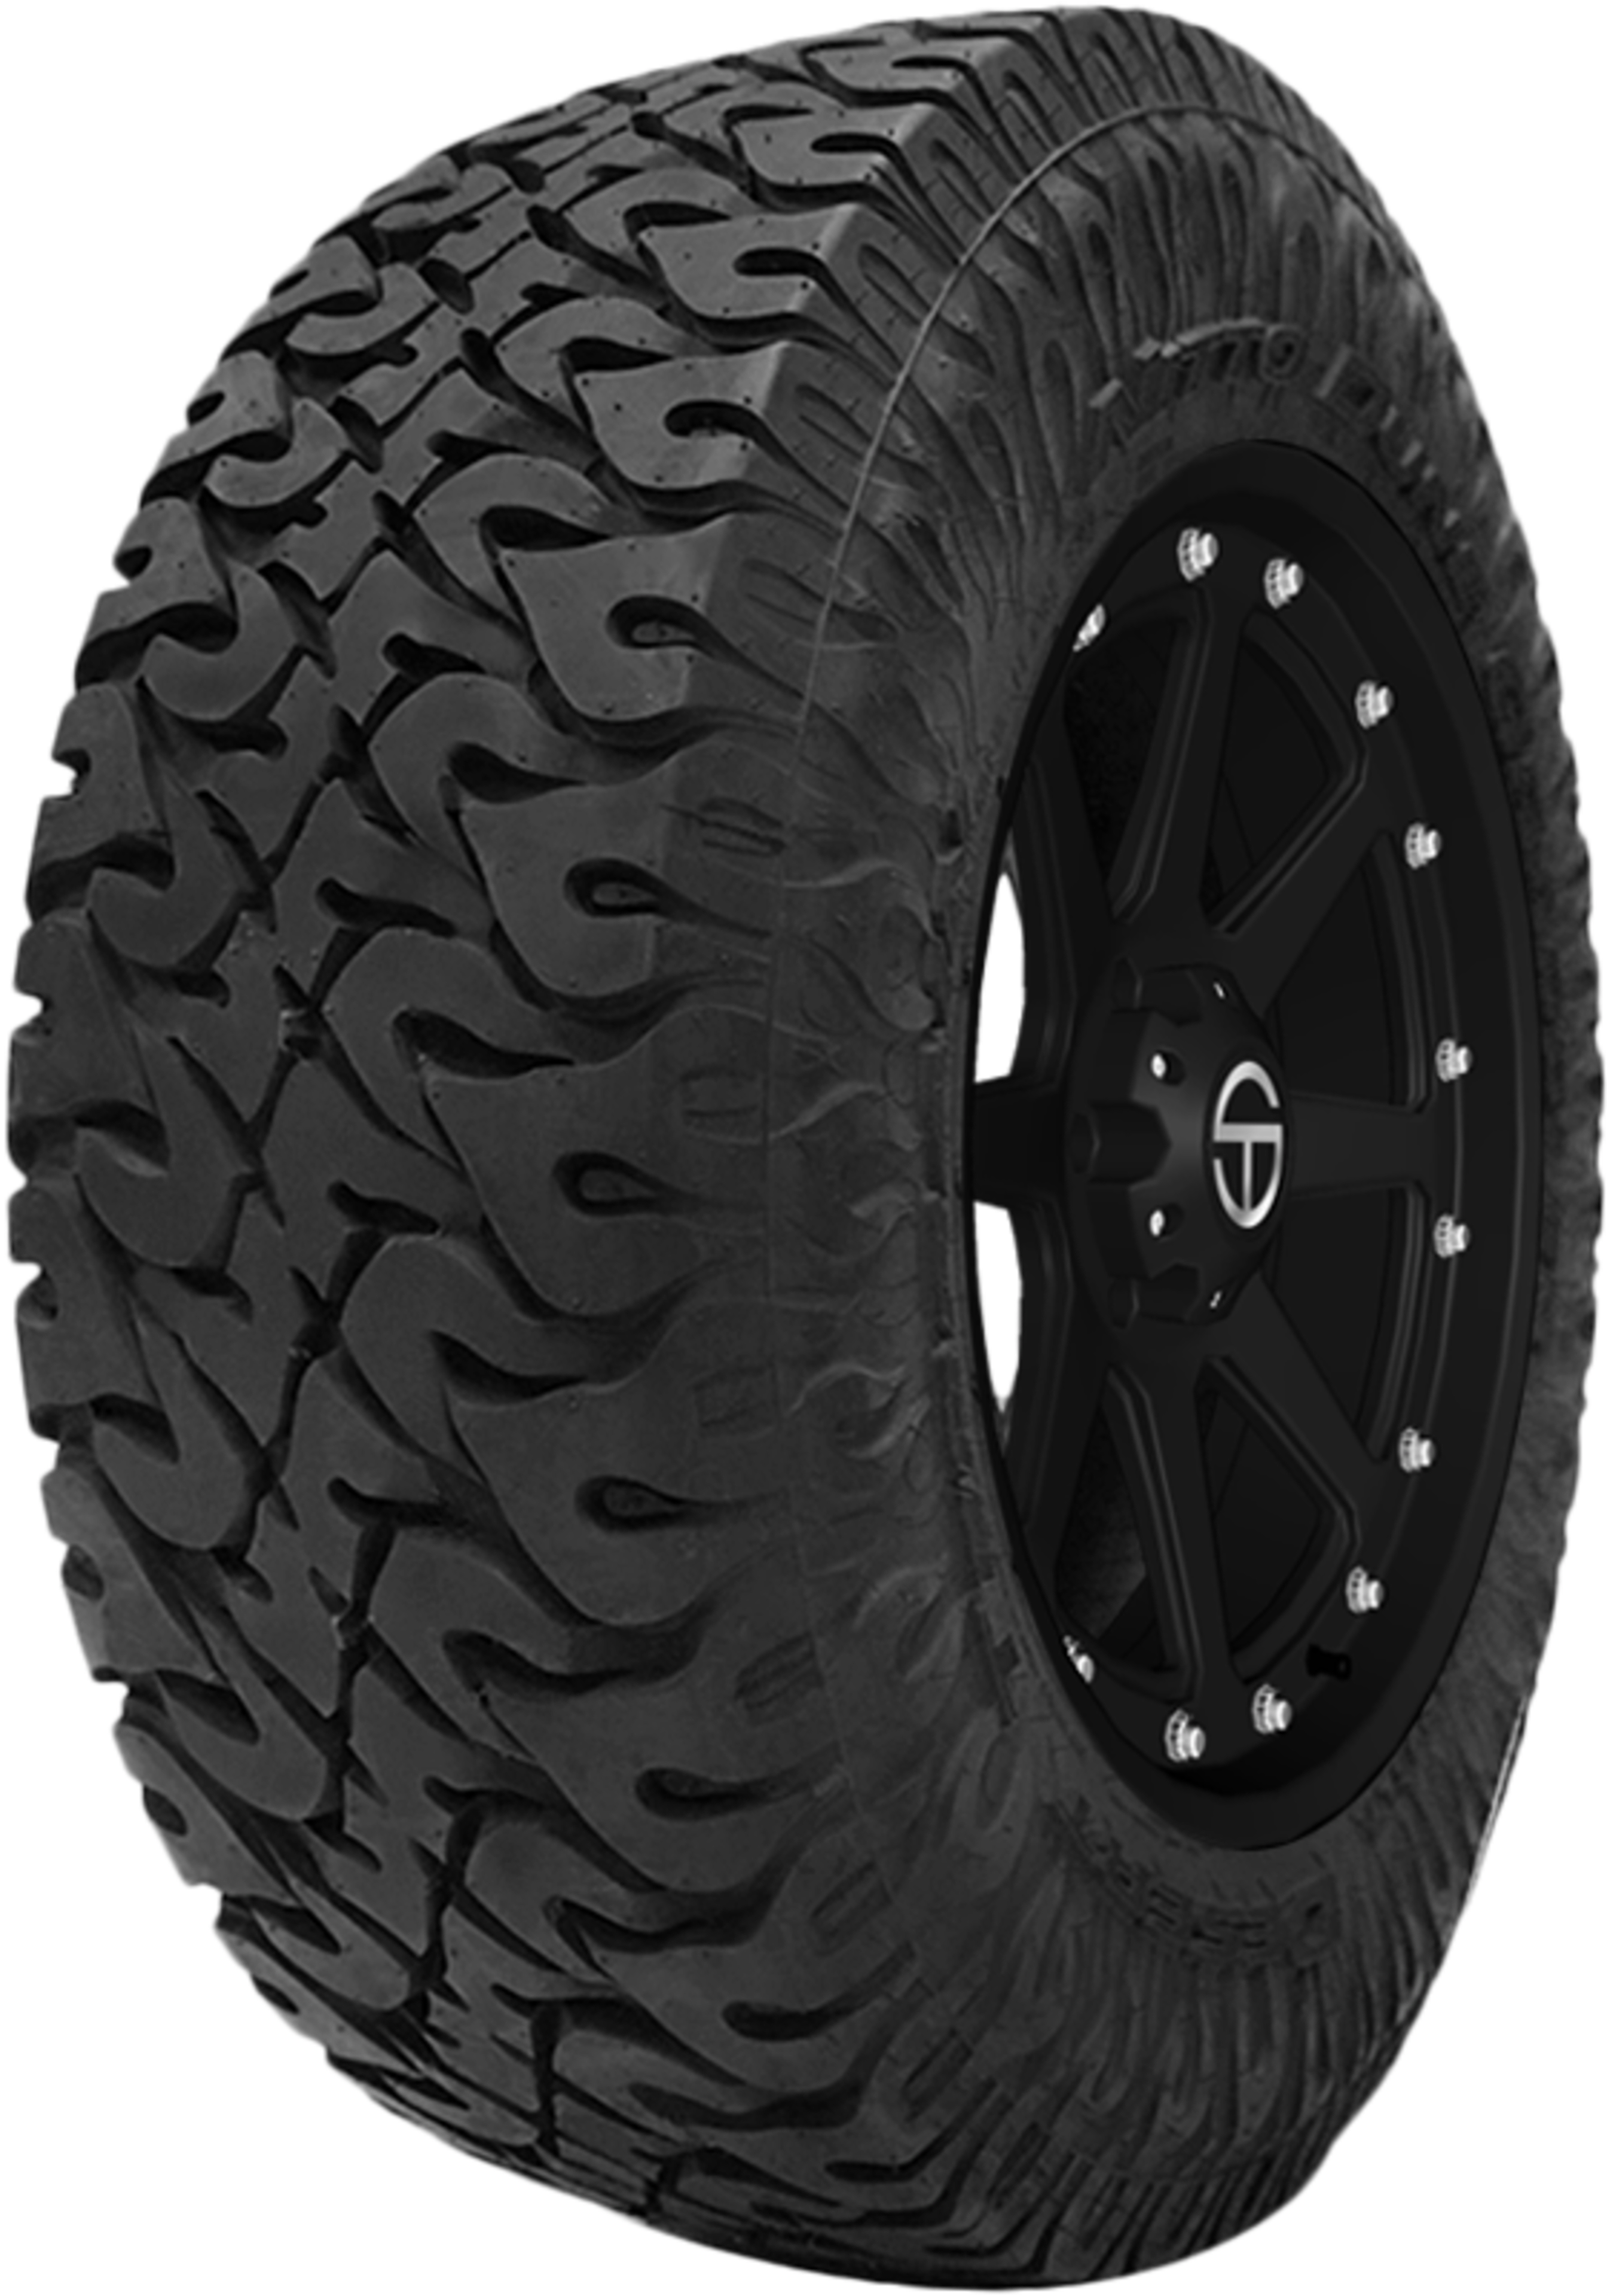 Buy Nitto Dune Grappler Tires Online | SimpleTire